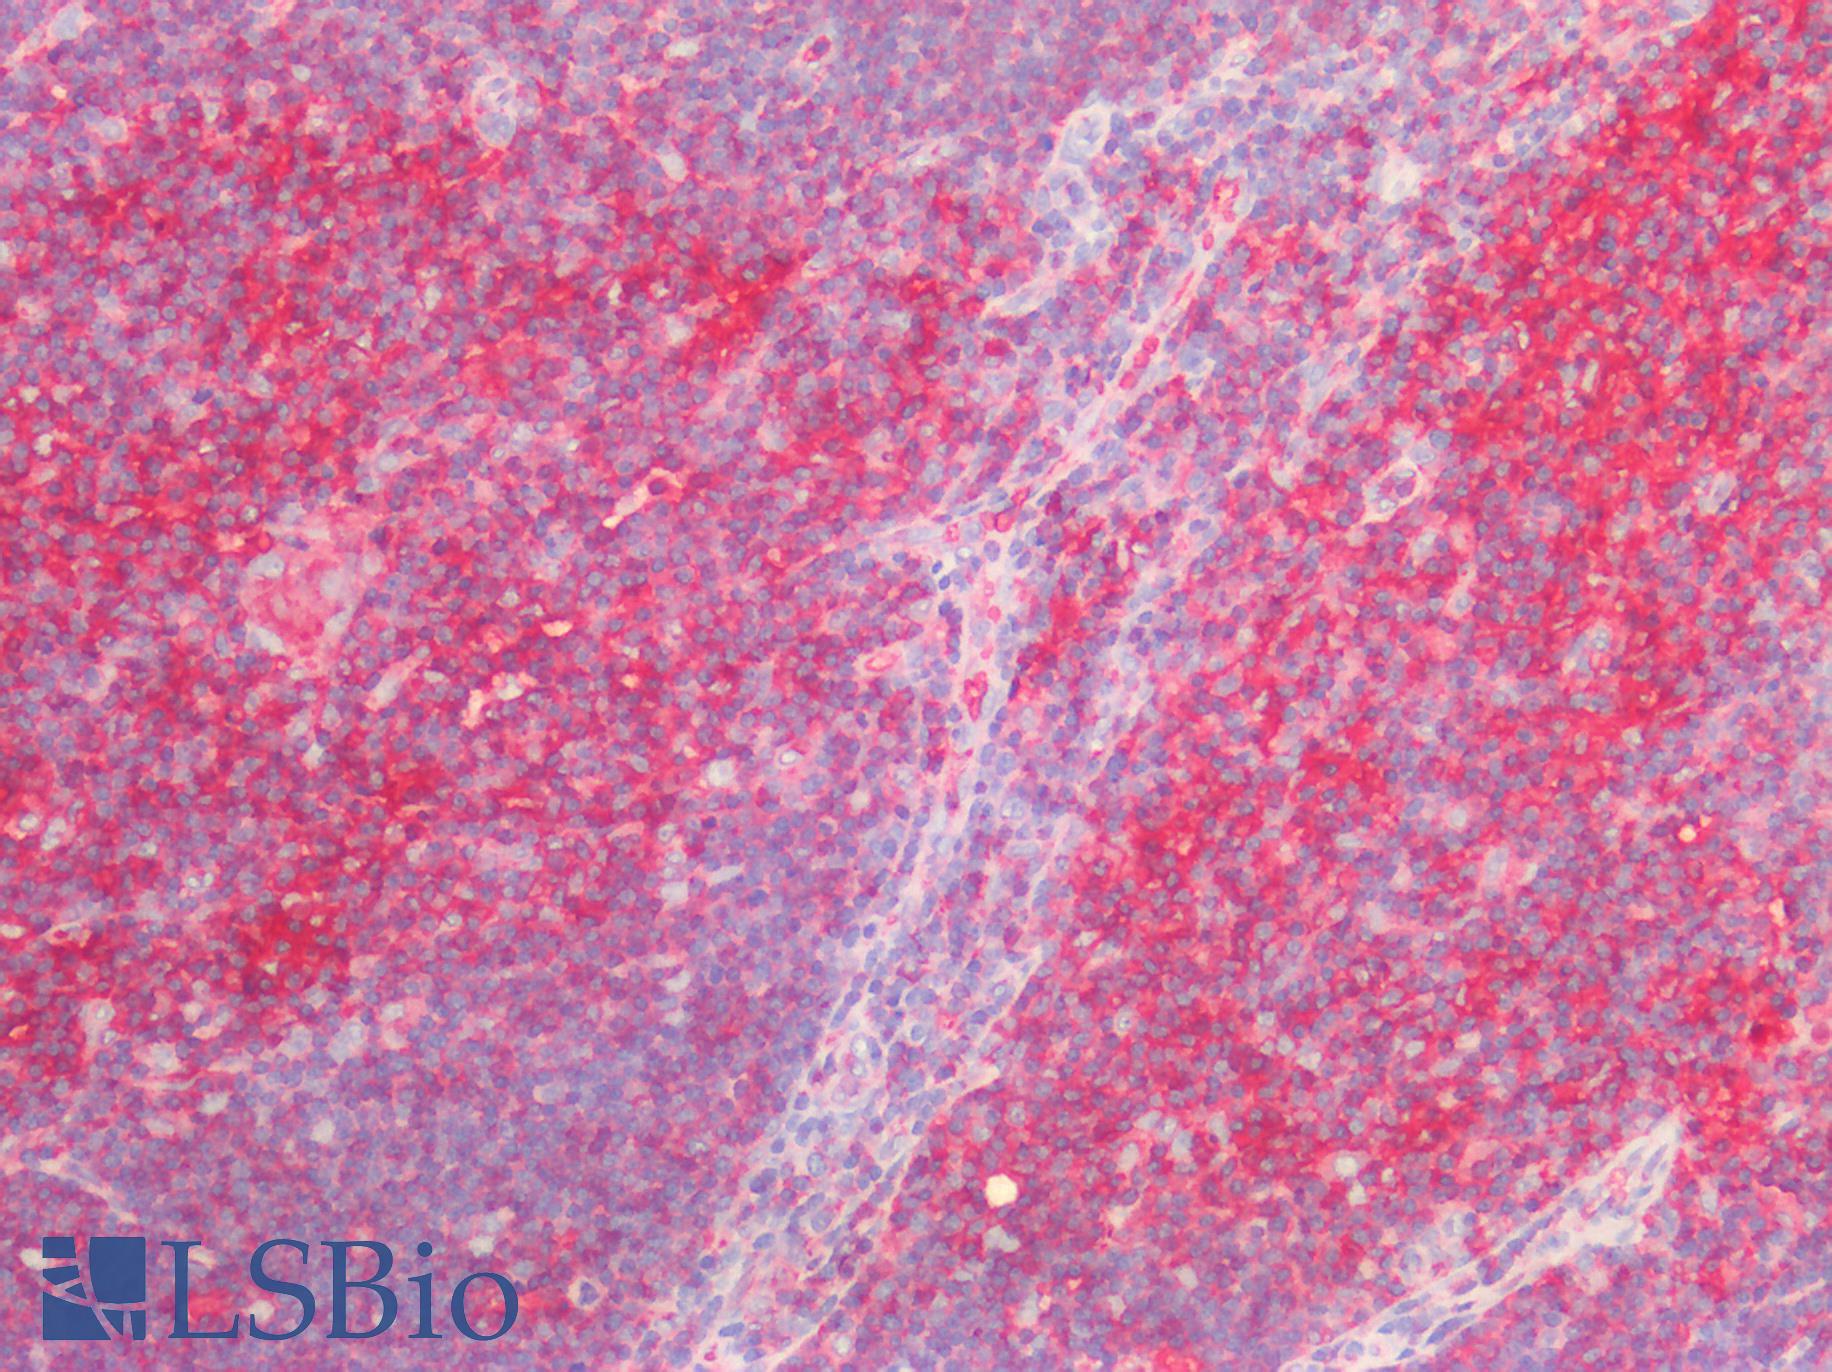 B2M / Beta 2 Microglobulin Antibody - Human Thymus: Formalin-Fixed, Paraffin-Embedded (FFPE)